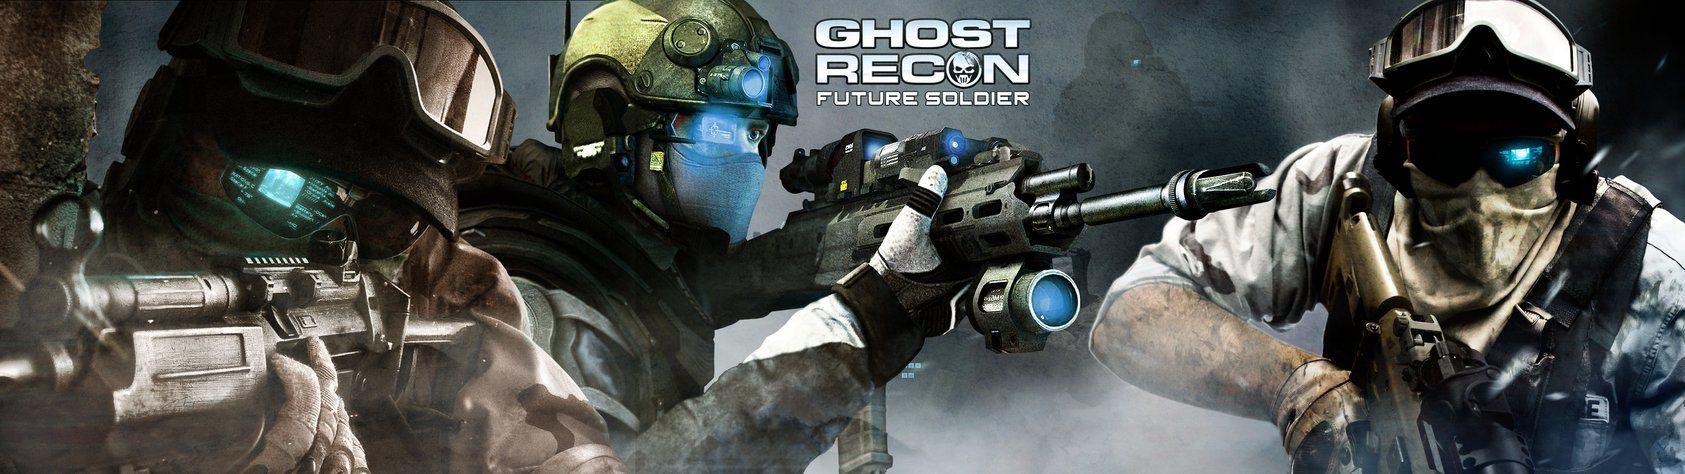 Ghost Recon: Future Soldier (Widescreen Wallpaper)